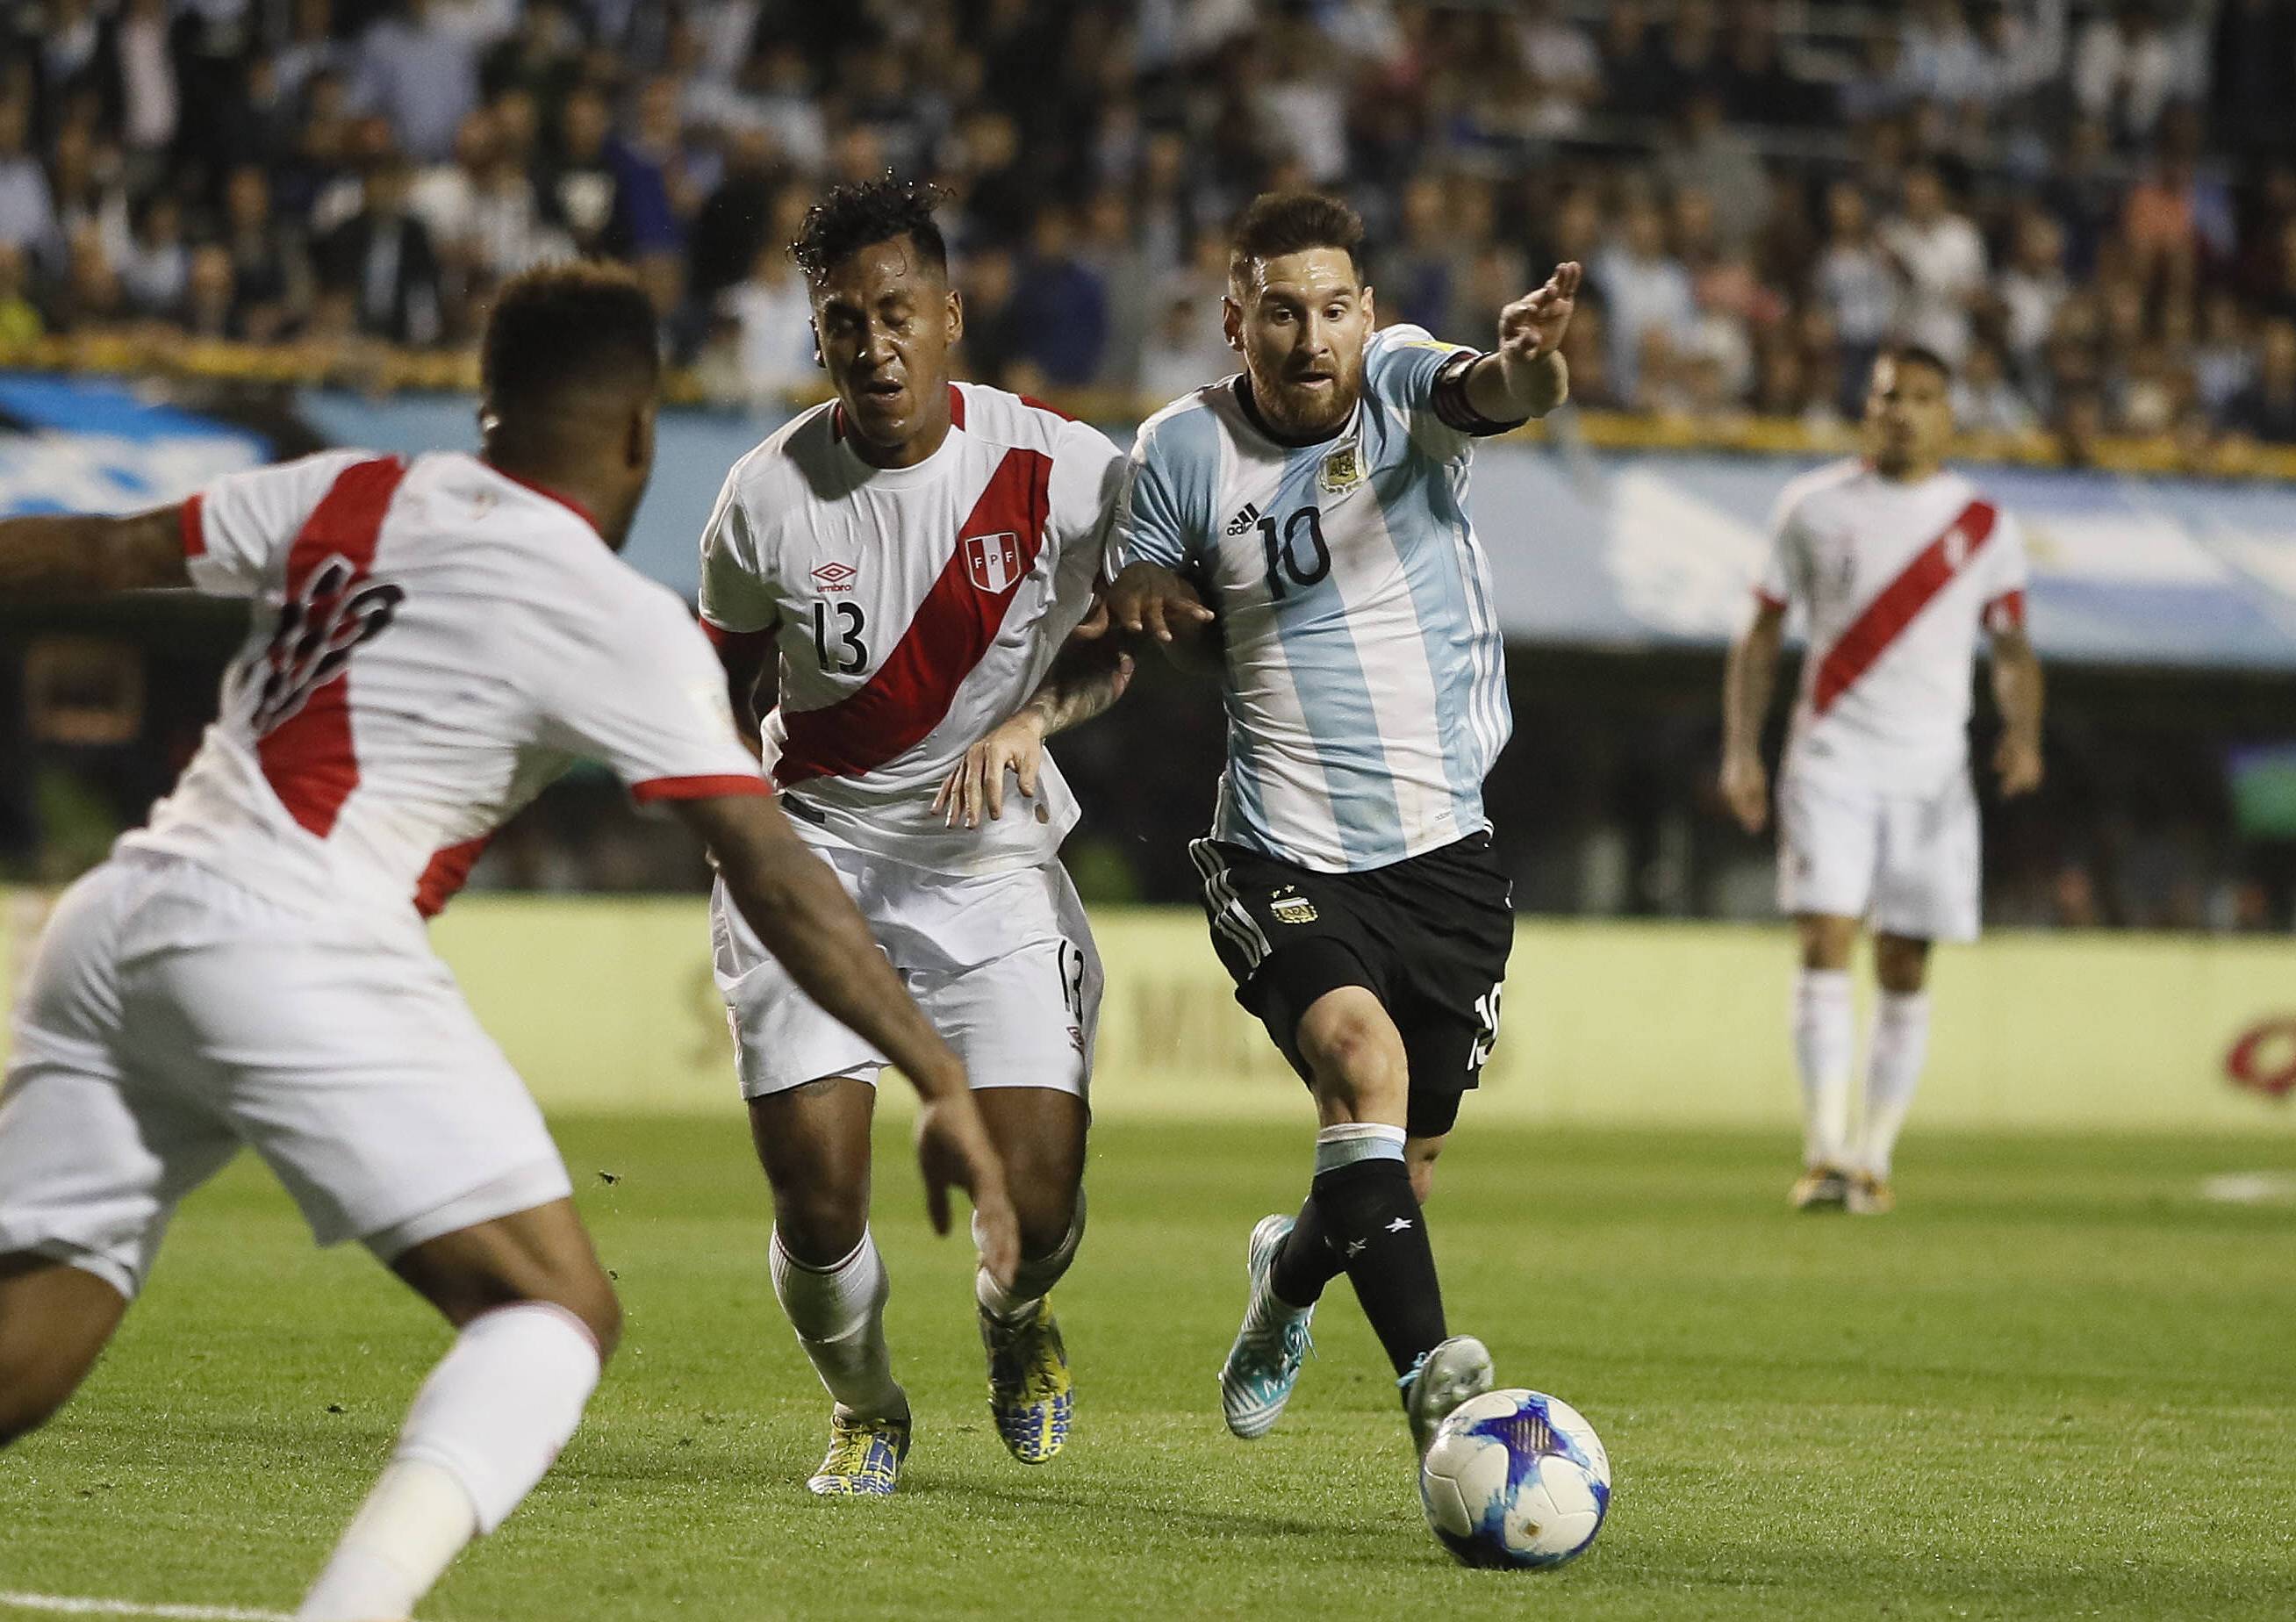 Futbol Argentina Vs Peru Claisficatorias Al Mundial De Rusia 2018 El